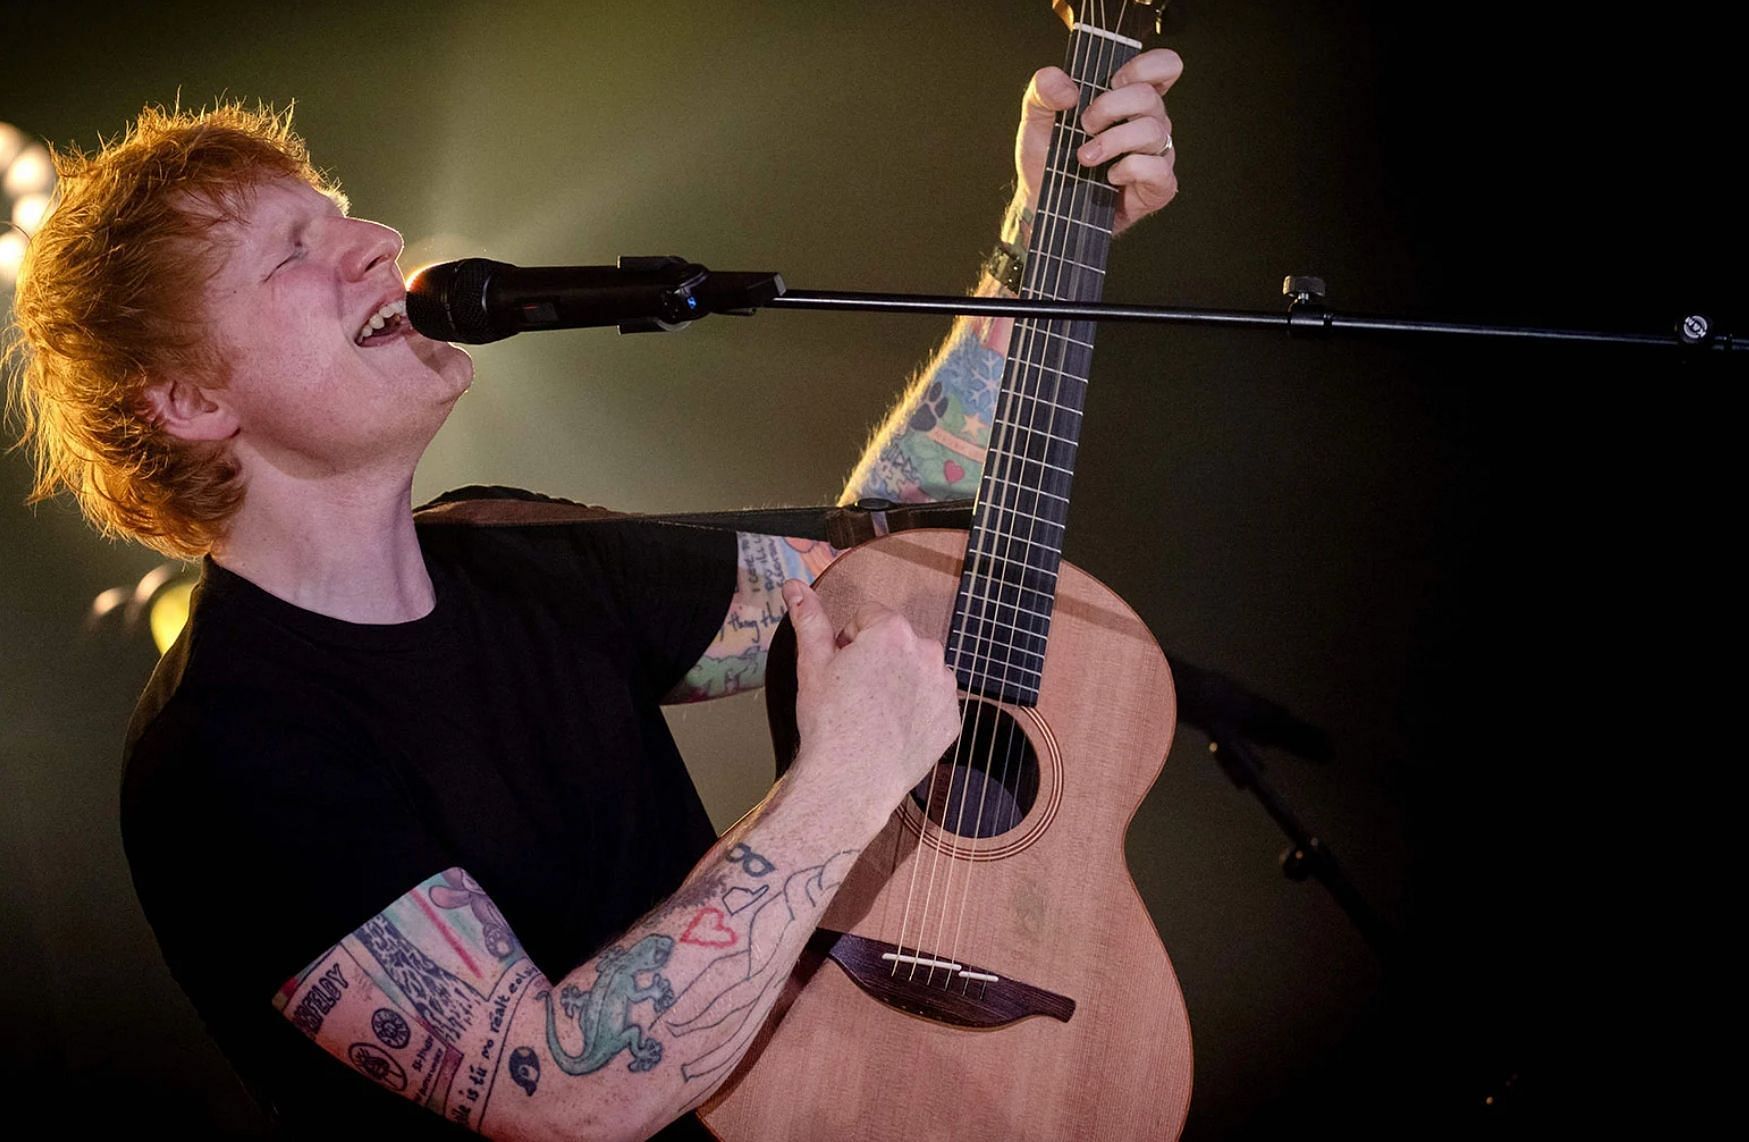 Ed Sheeran during a live performance (Image via AFP)